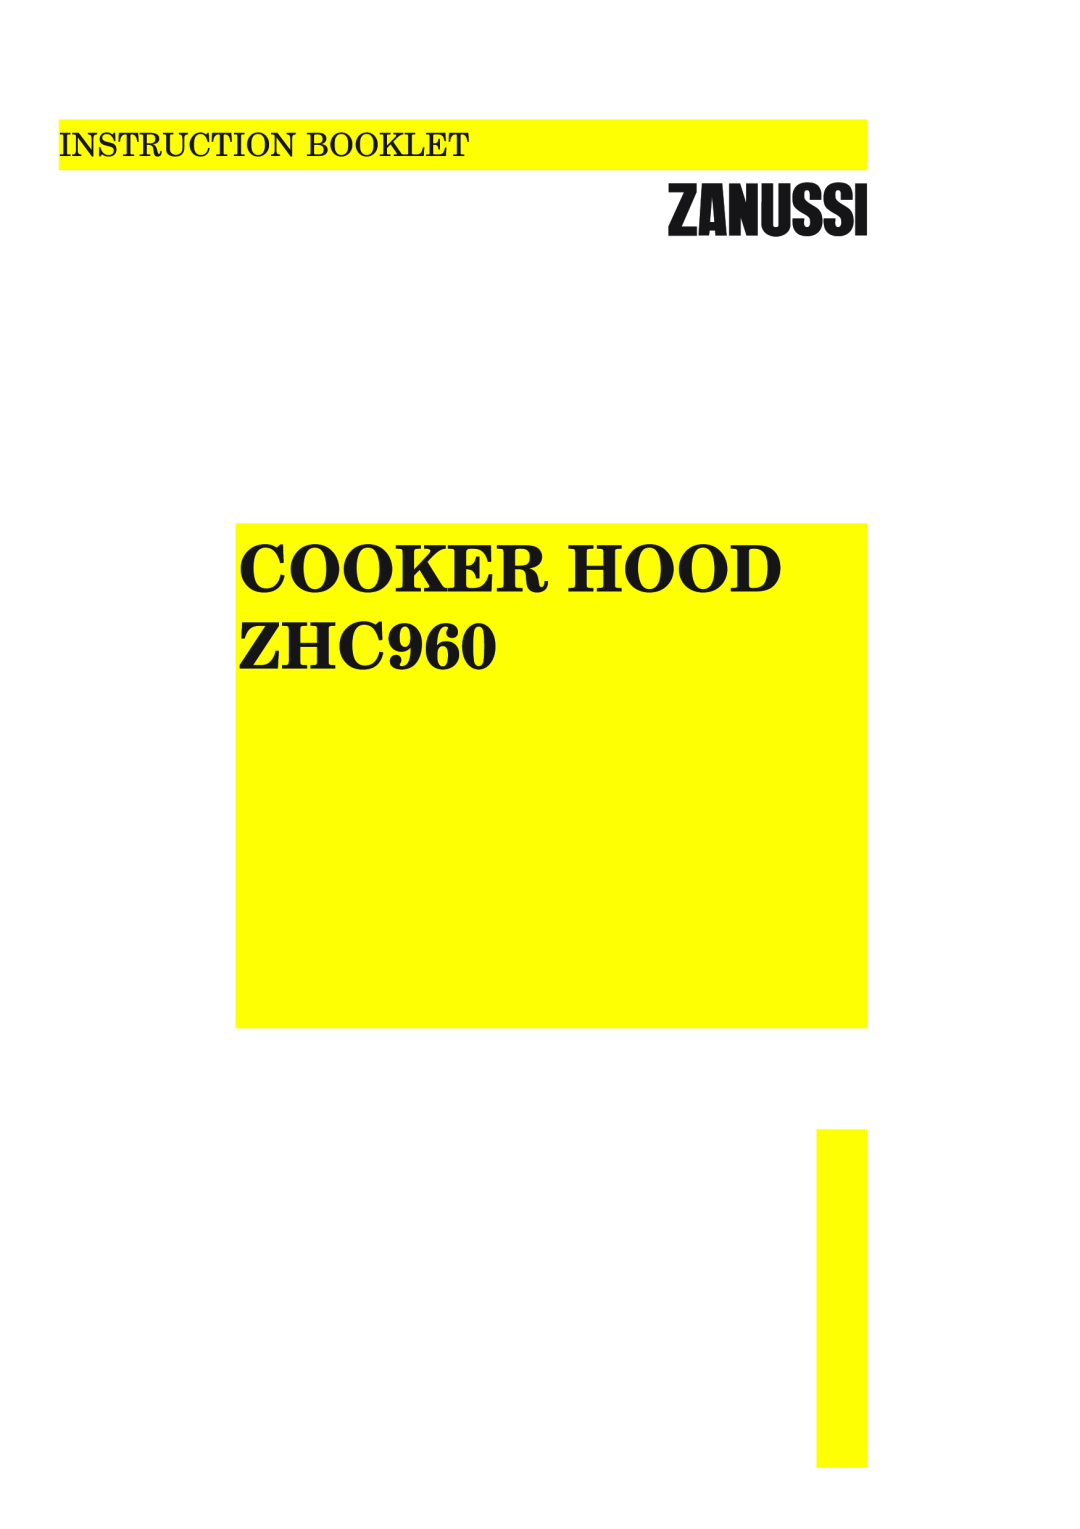 Zanussi manual COOKER HOOD ZHC960, Instruction Booklet 